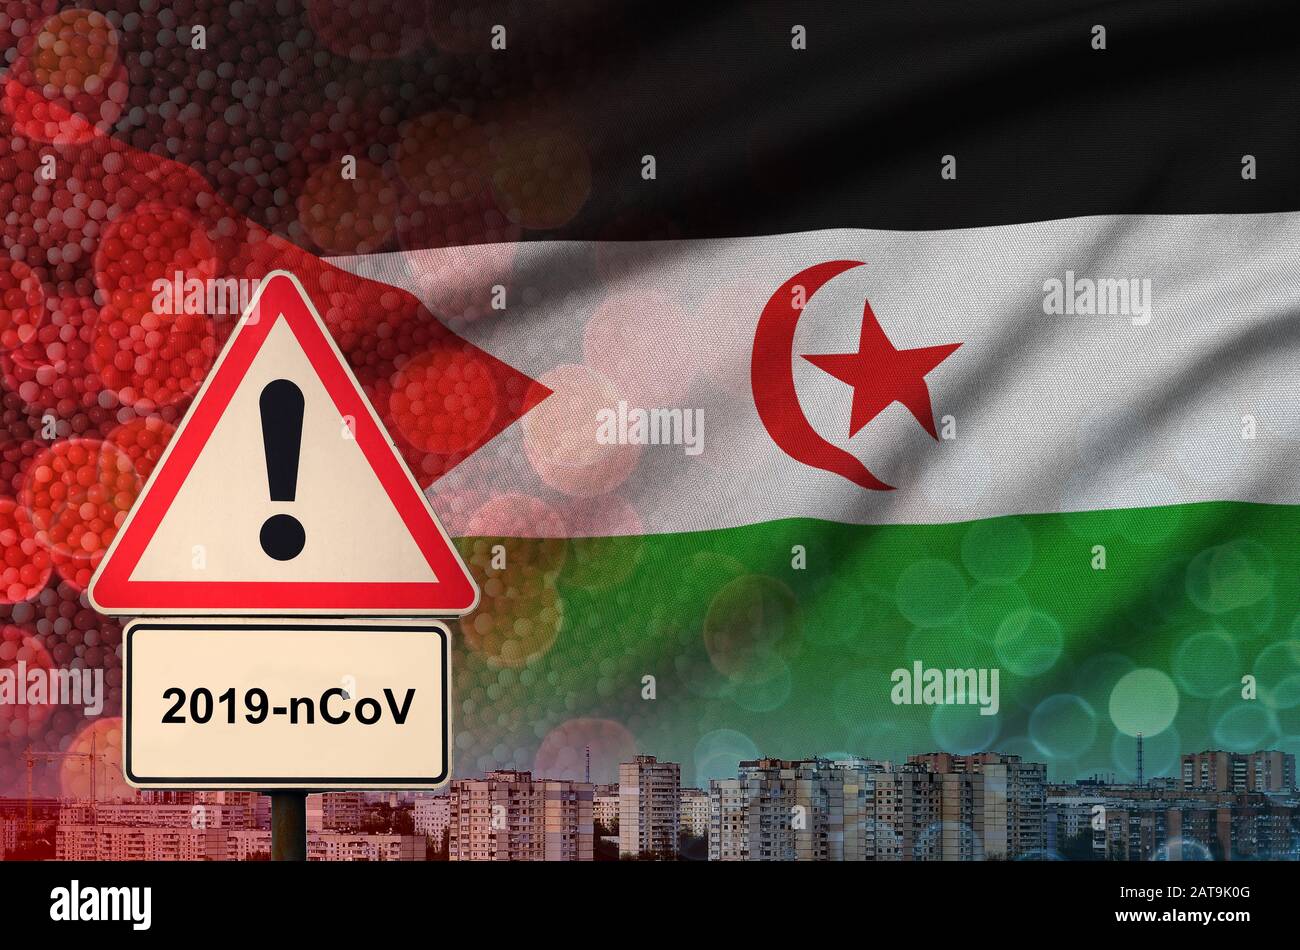 Western Sahara flag and Coronavirus 2019-nCoV alert sign. Concept of high probability of novel coronavirus outbreak through traveling Chinese tourists Stock Photo